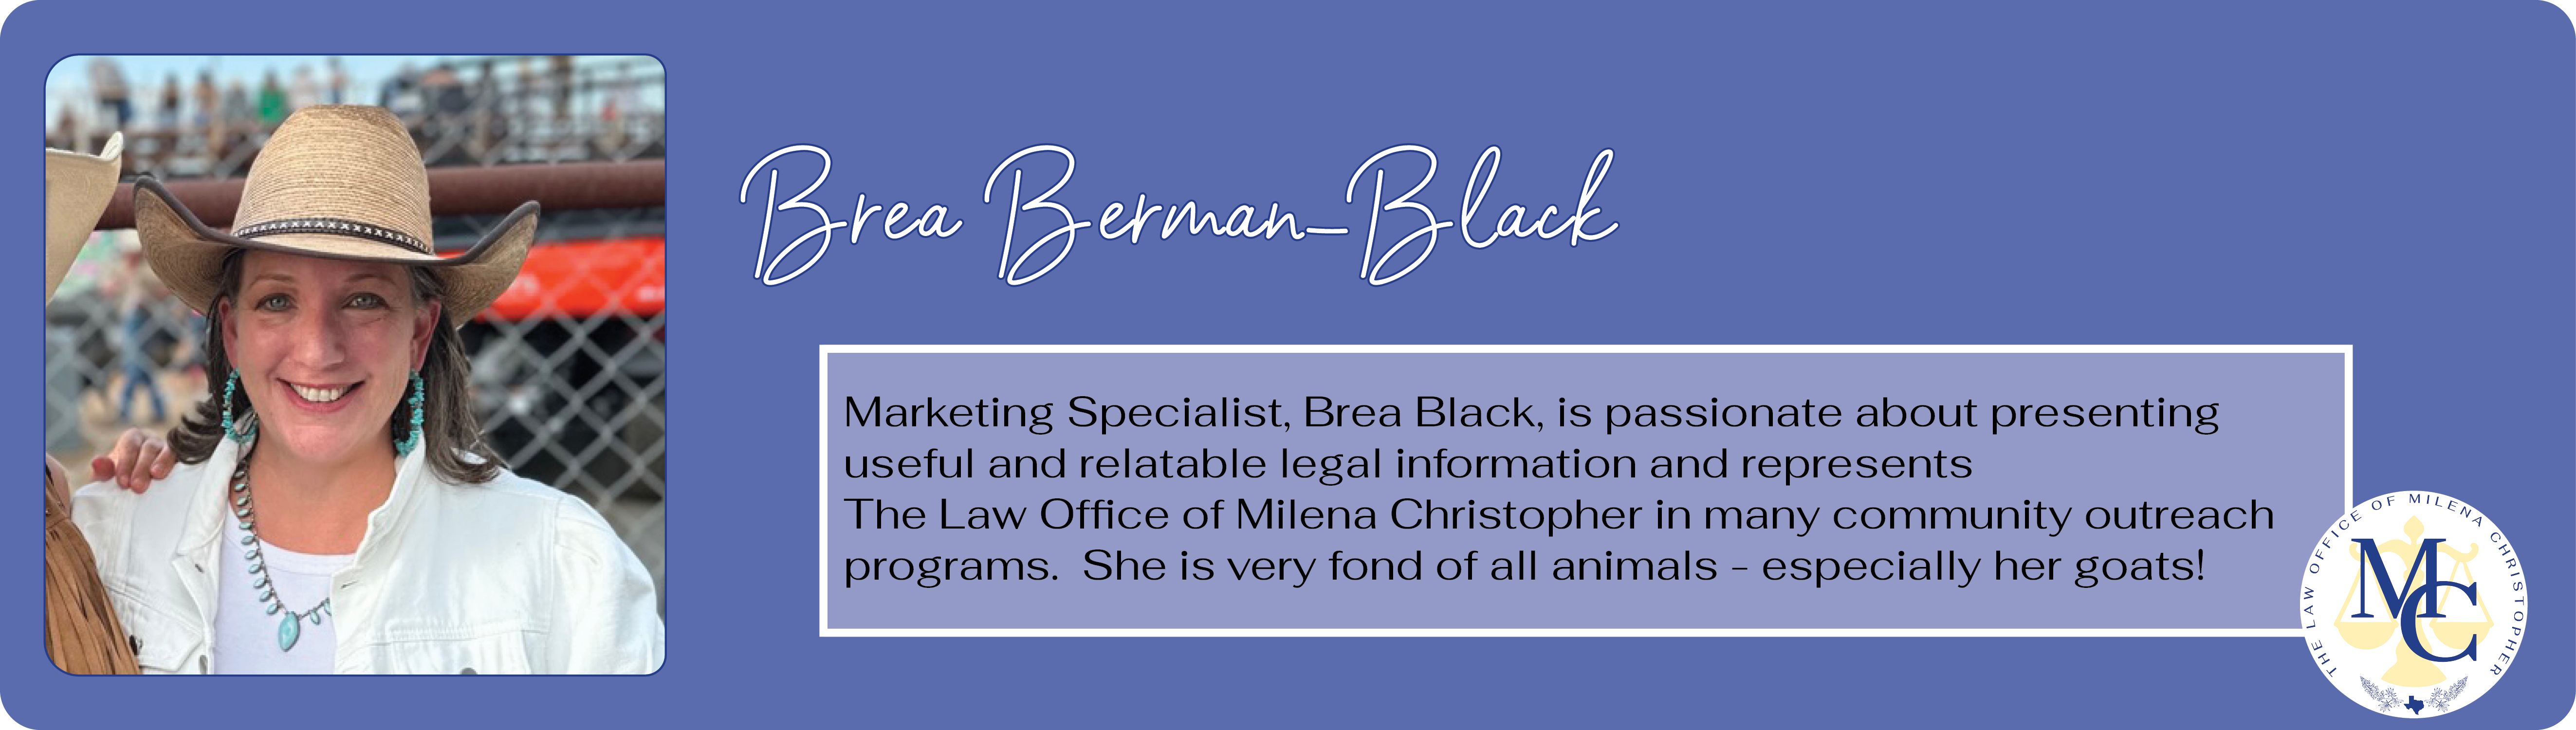 Brea Berman-Black 